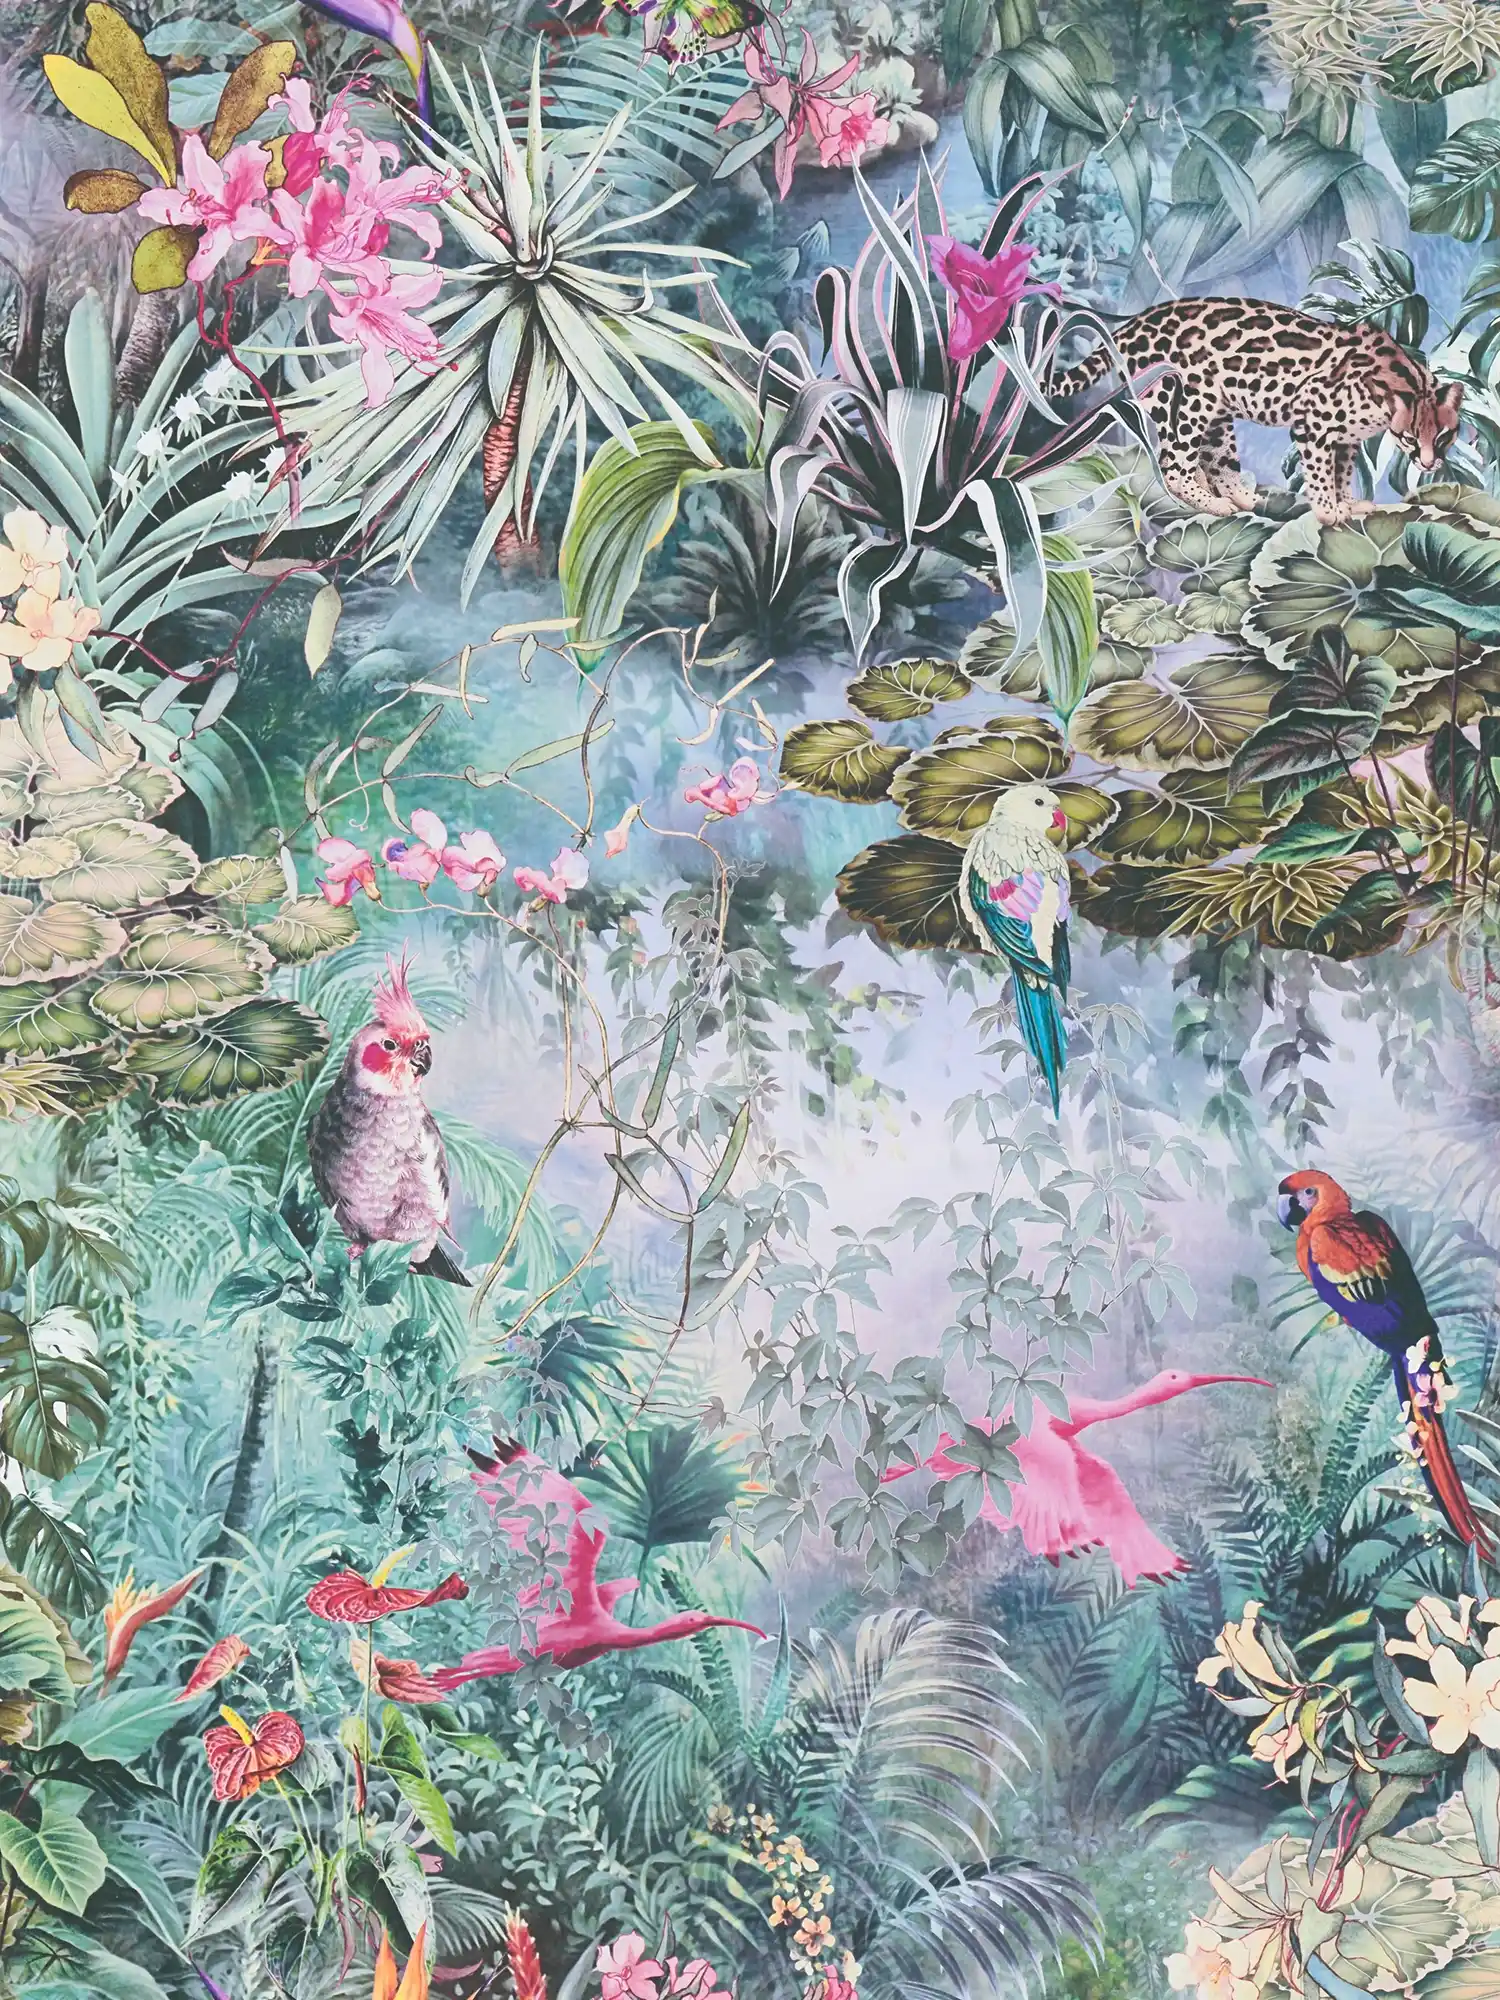 Jungle wallpaper animals & plants in watercolour look
